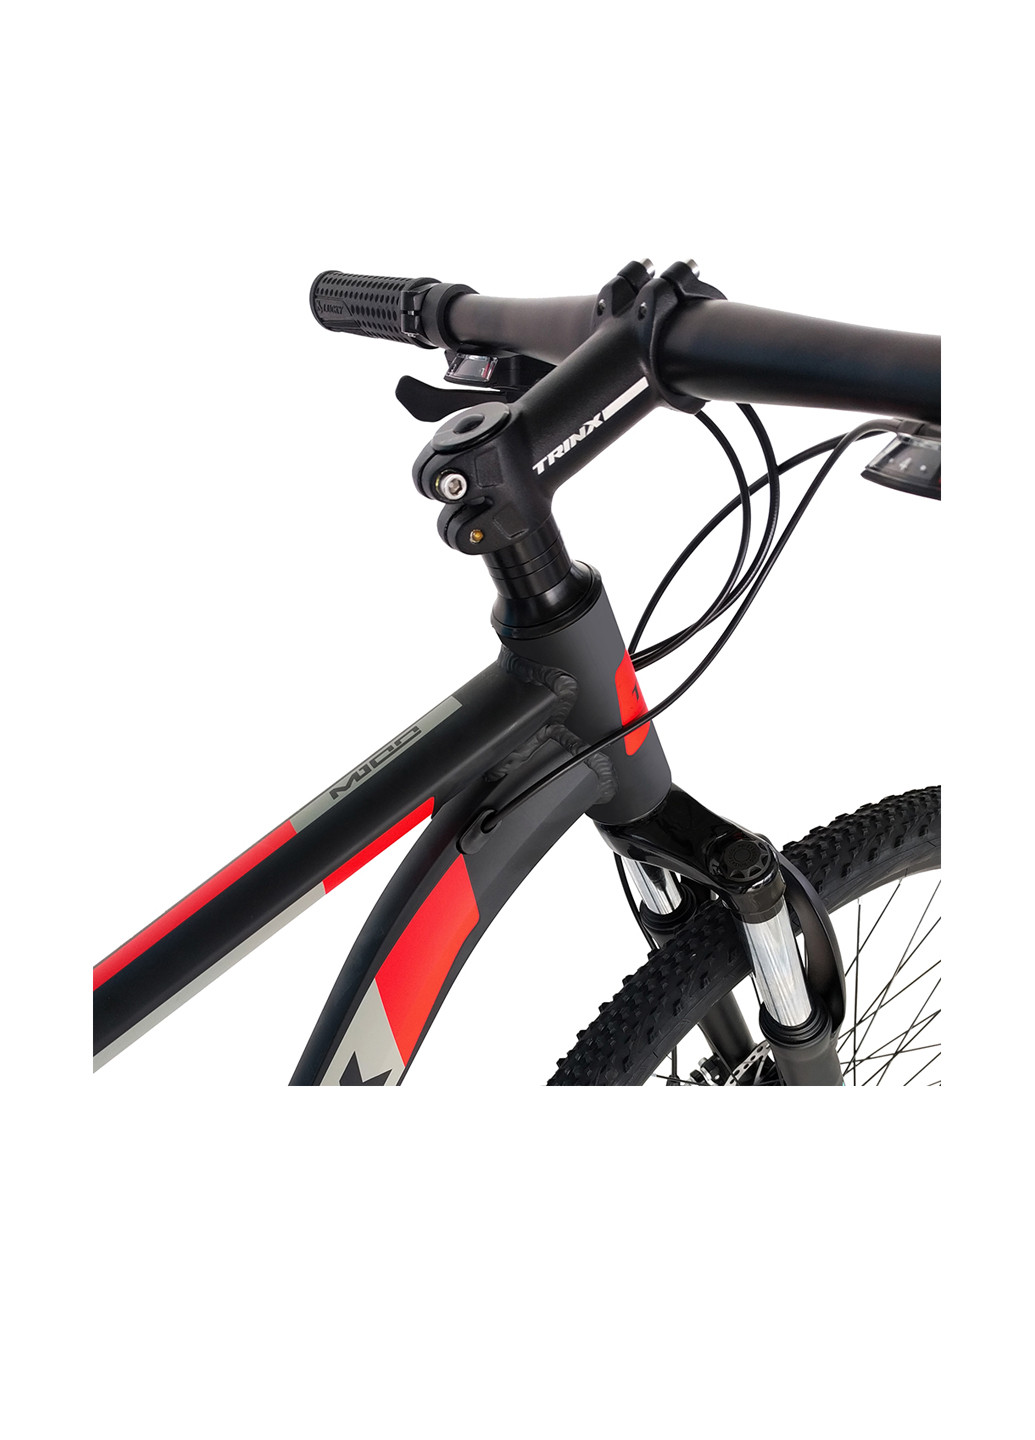 Велосипед M100 26 "х19" Matt-Black-Red-Cyan Trinx m100 26"х19" matt-black-red-cyan (146489508)